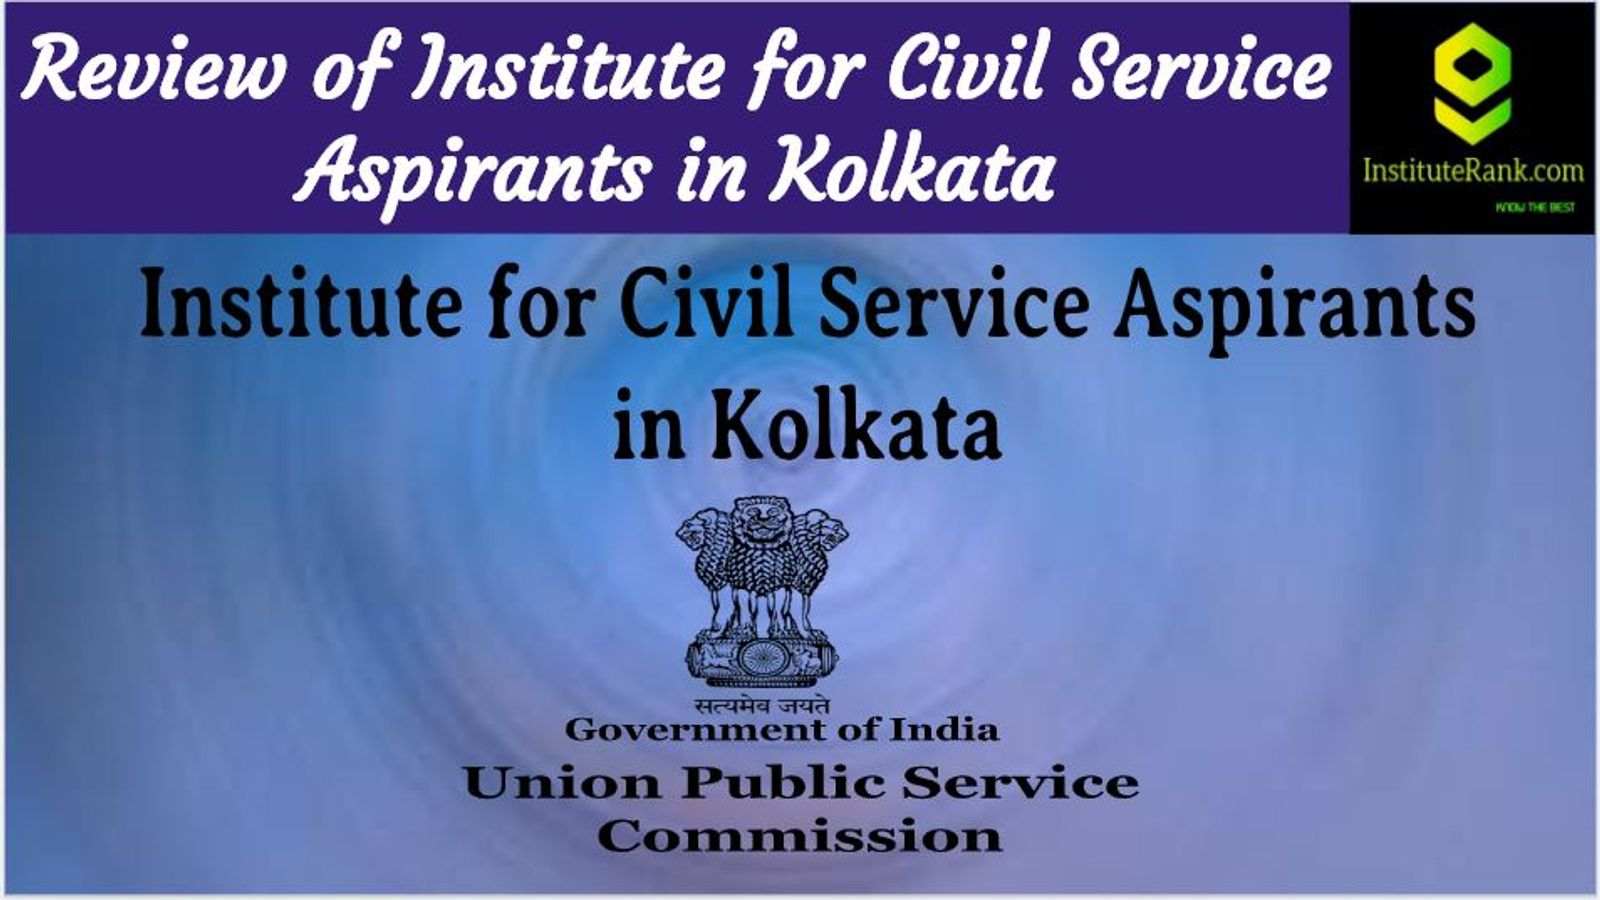 Institute for Civil Service Aspirants Kolkata Review